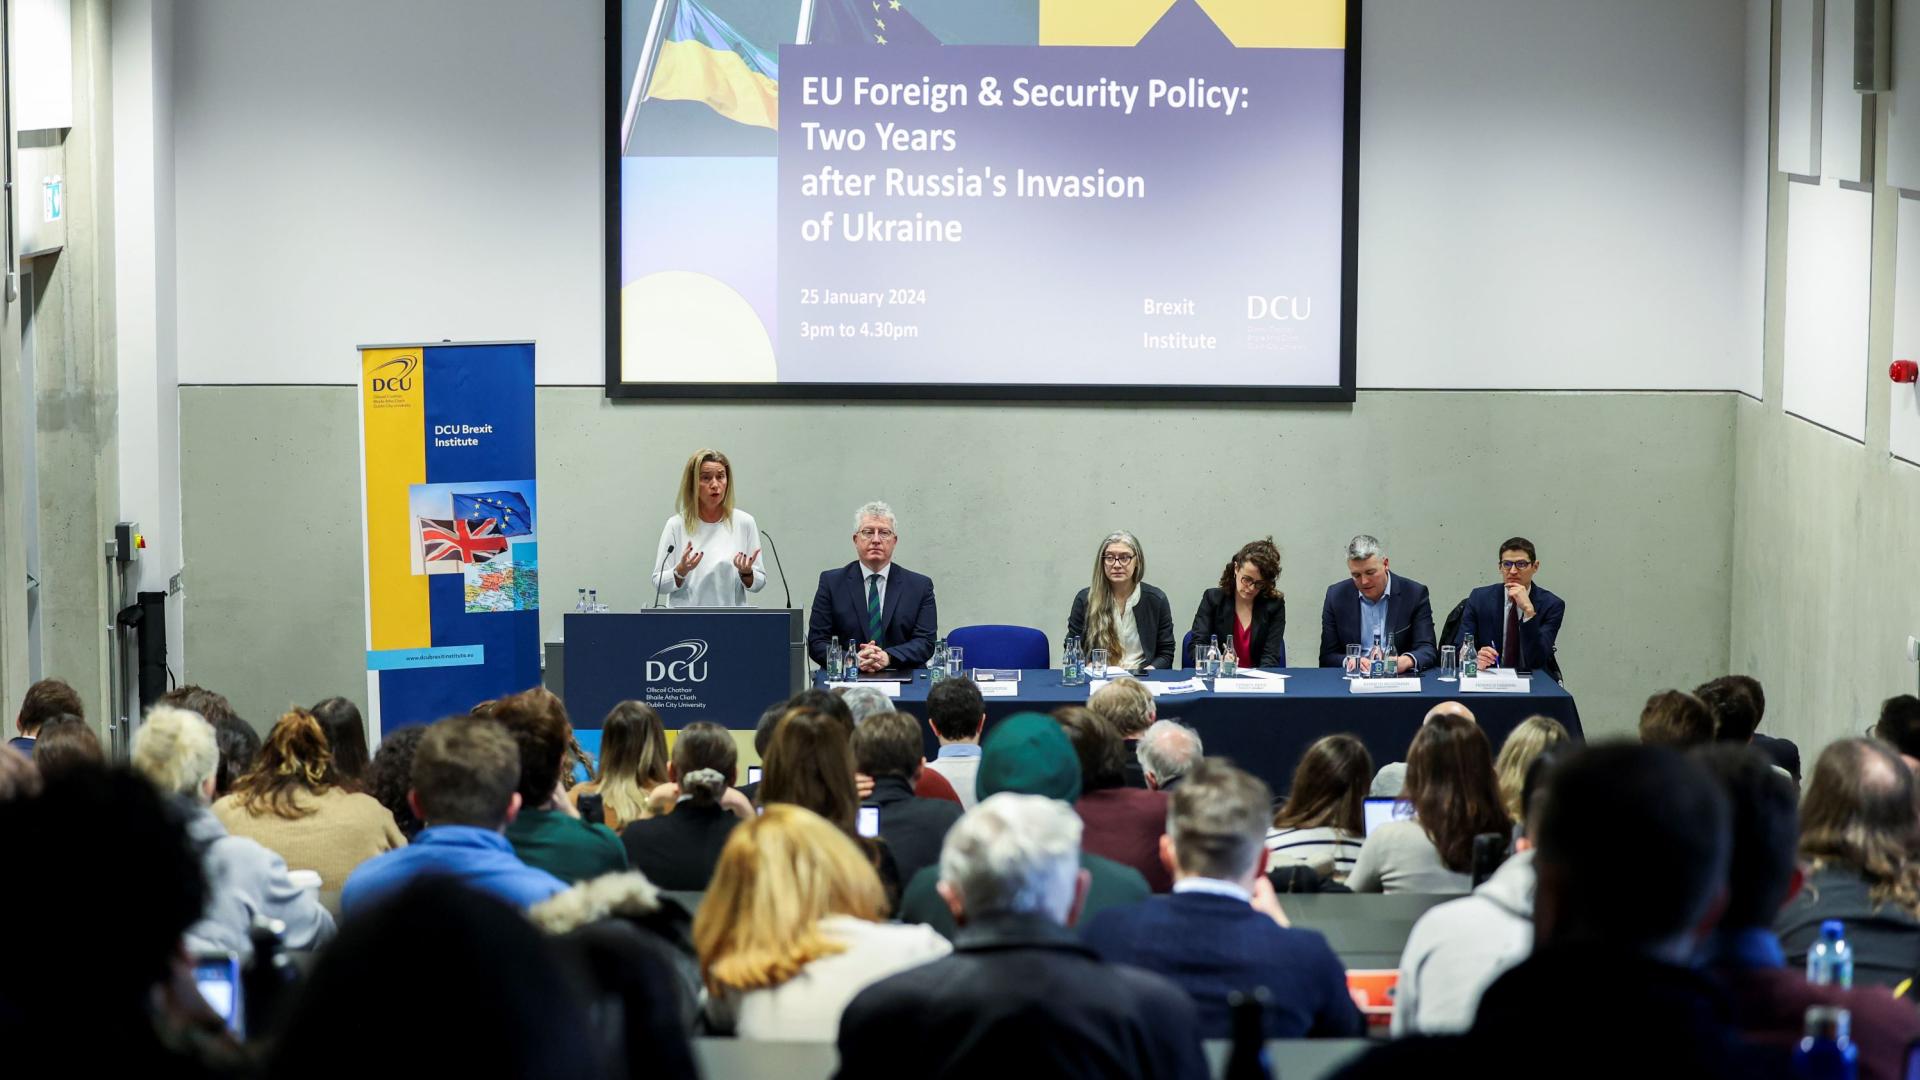 Visit of Federica Mogherini to the Brexit Institute